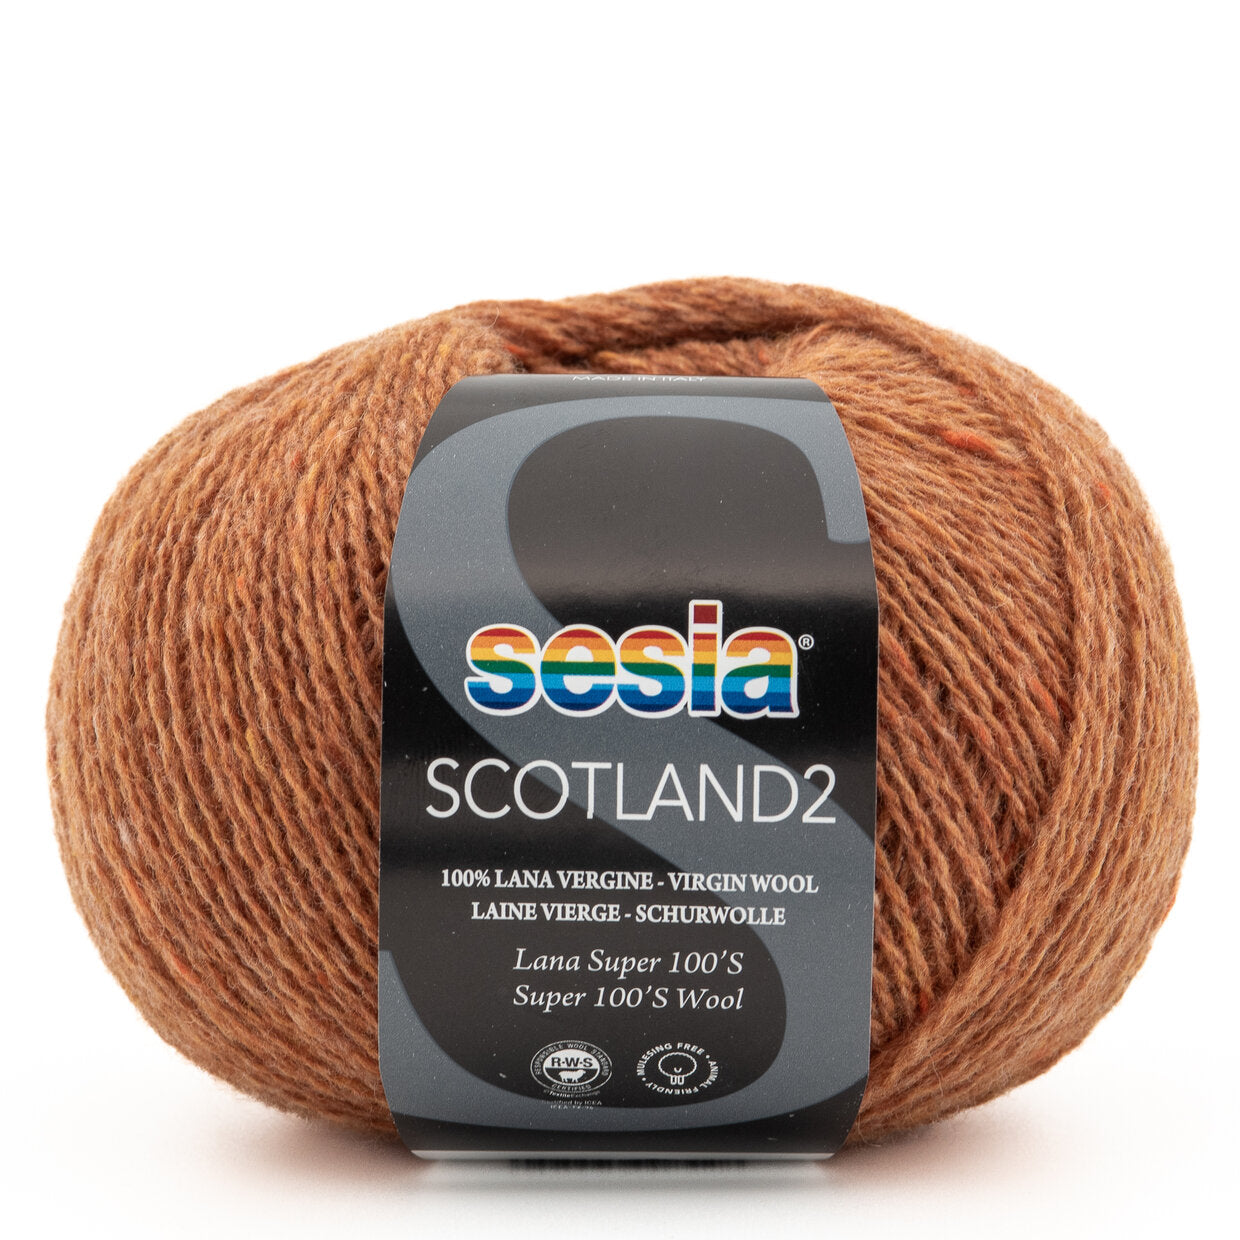 Sesia Scotland2 - 4 ply - 100% wool